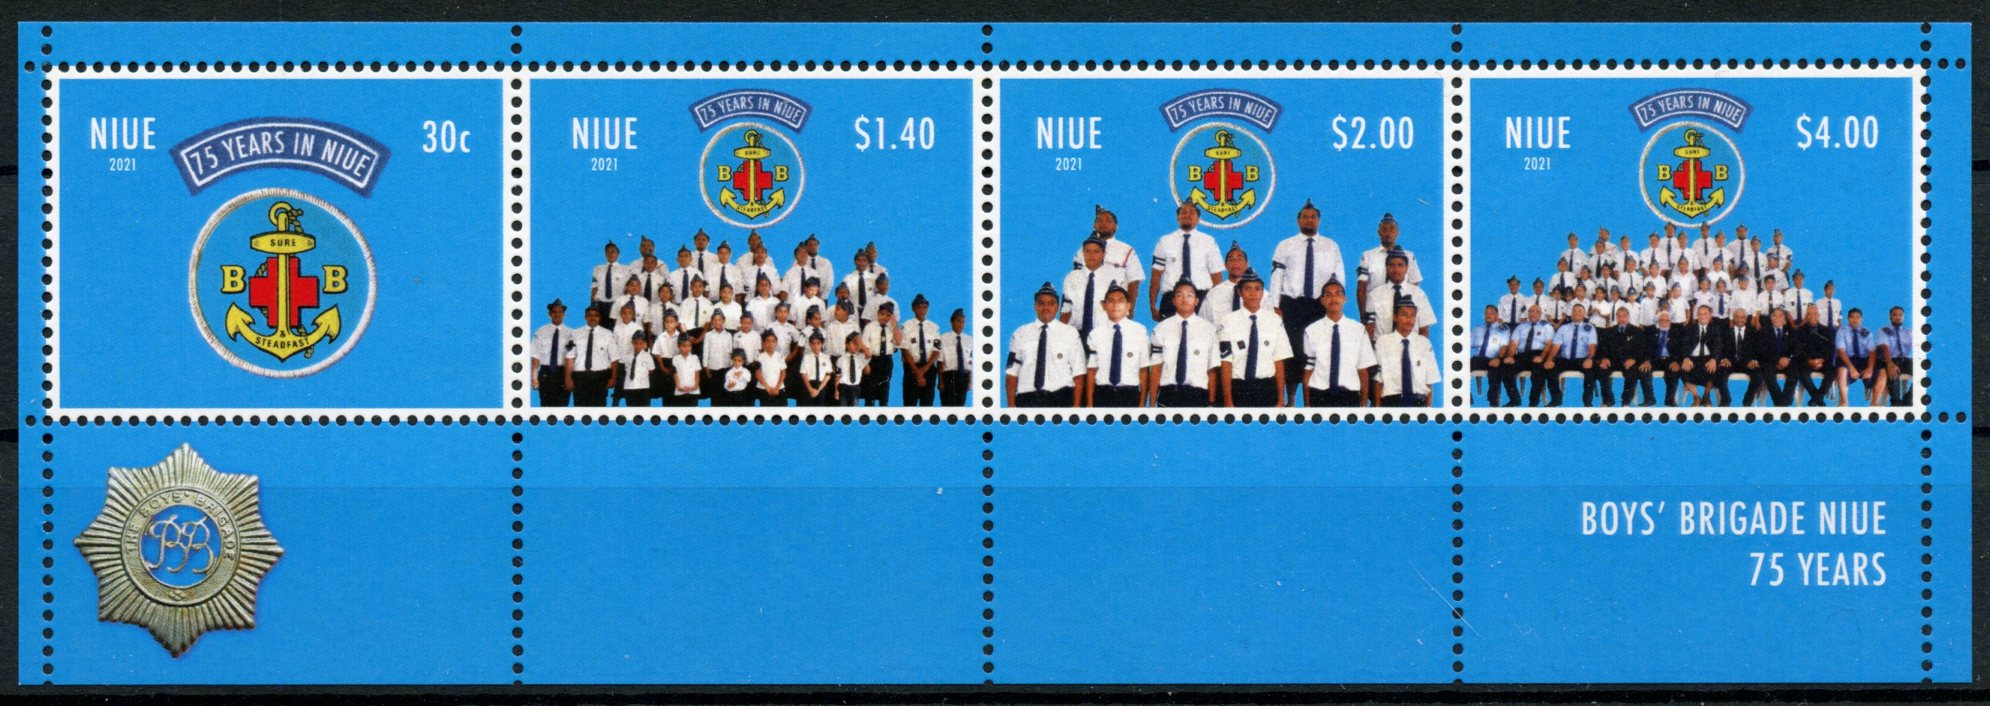 Niue 2021 MHN Organizations Stamps Boy's Brigade 75 Years 4v M/S